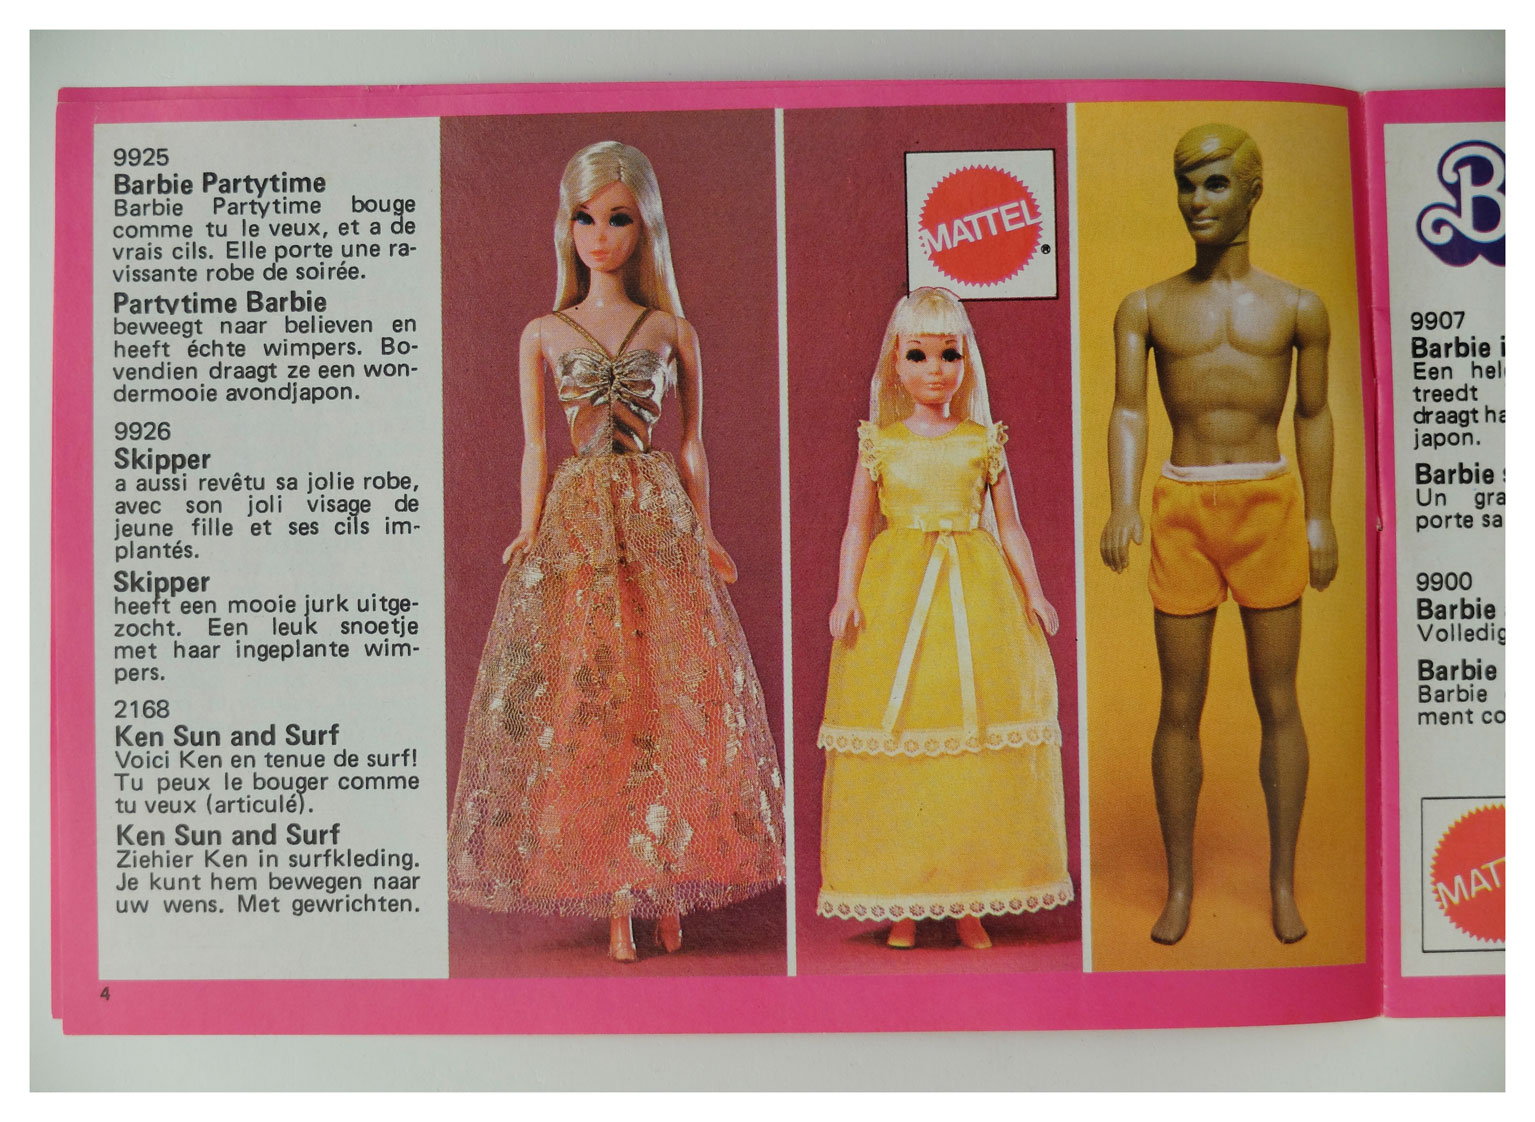 From 1979 Belgian Barbie booklet